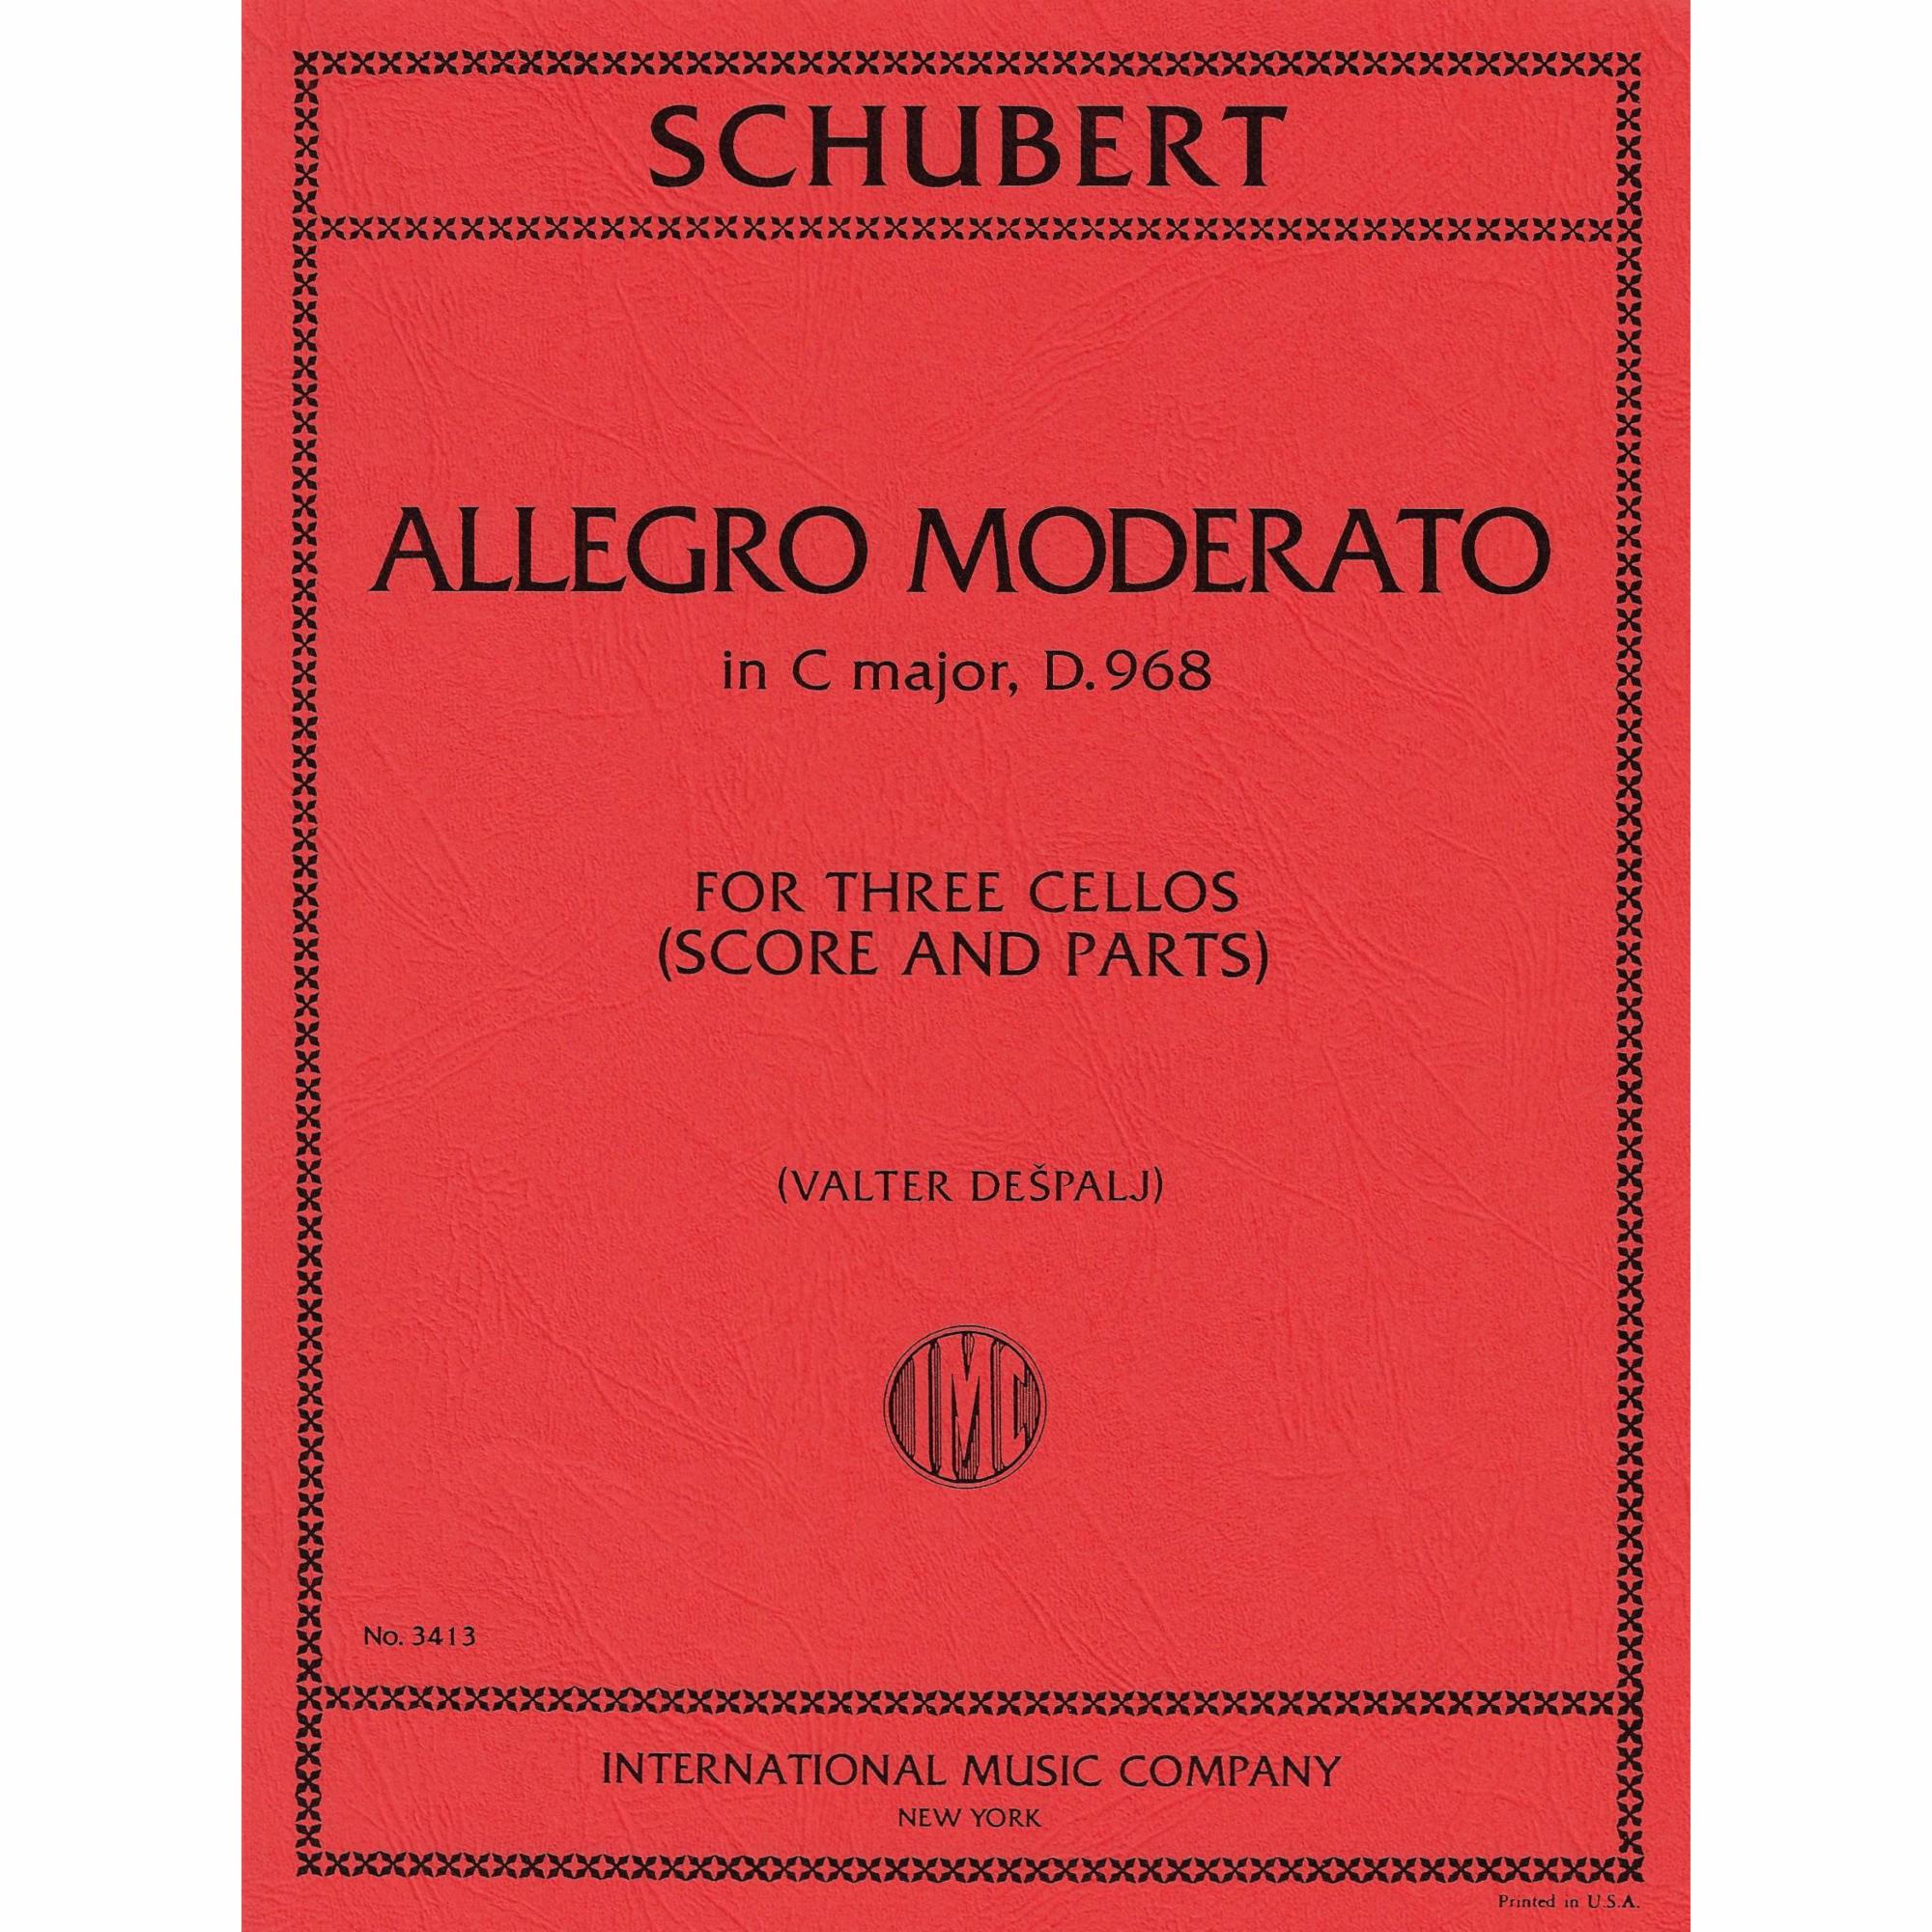 Schubert -- Allegro Moderato in C Major, D. 968 for Three Cellos